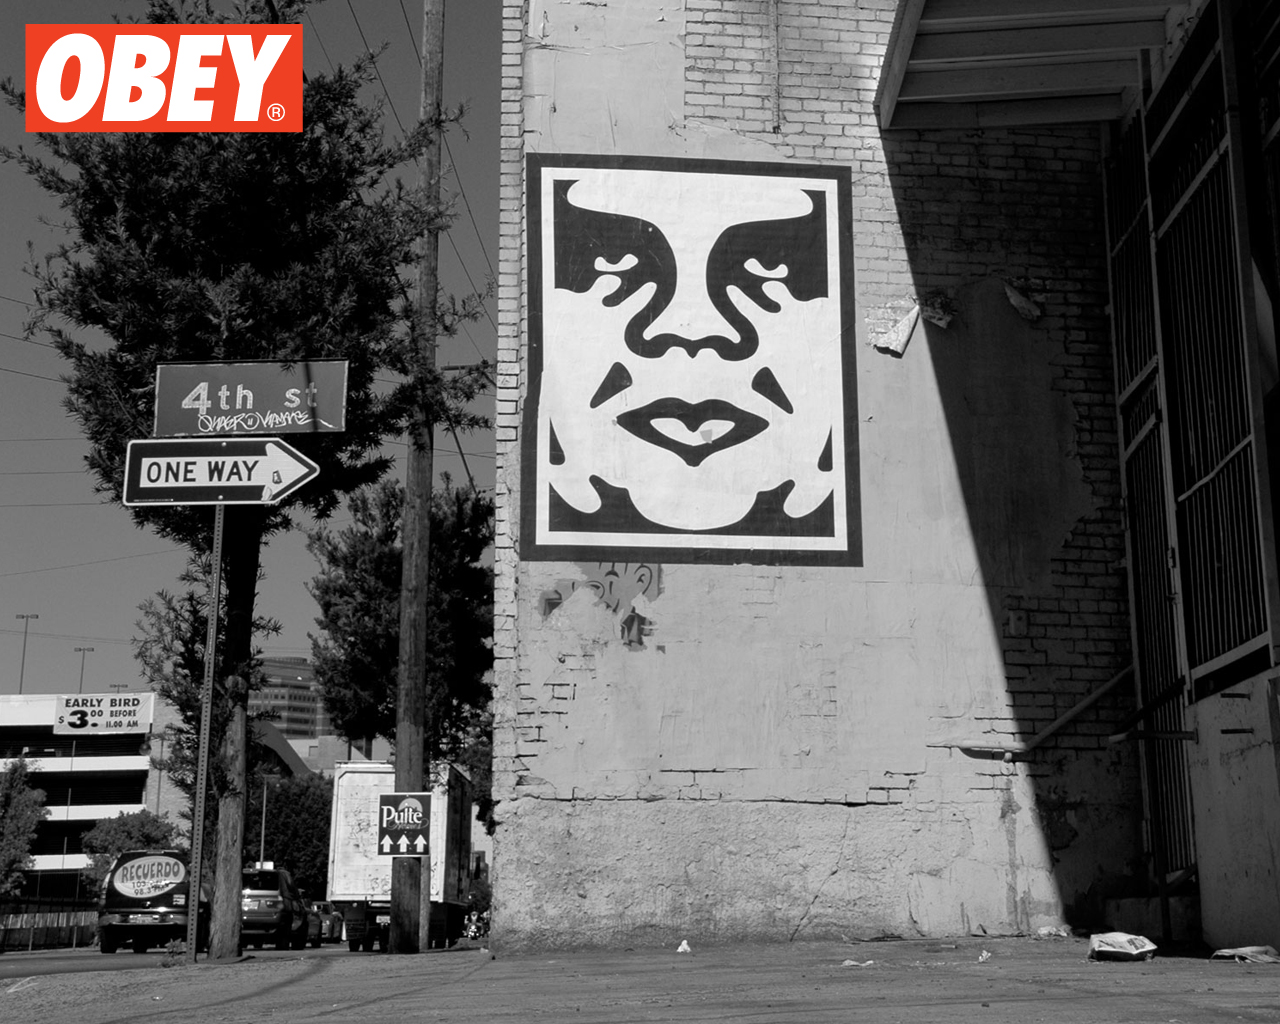 obey wallpaper,street art,art,black and white,graffiti,monochrome